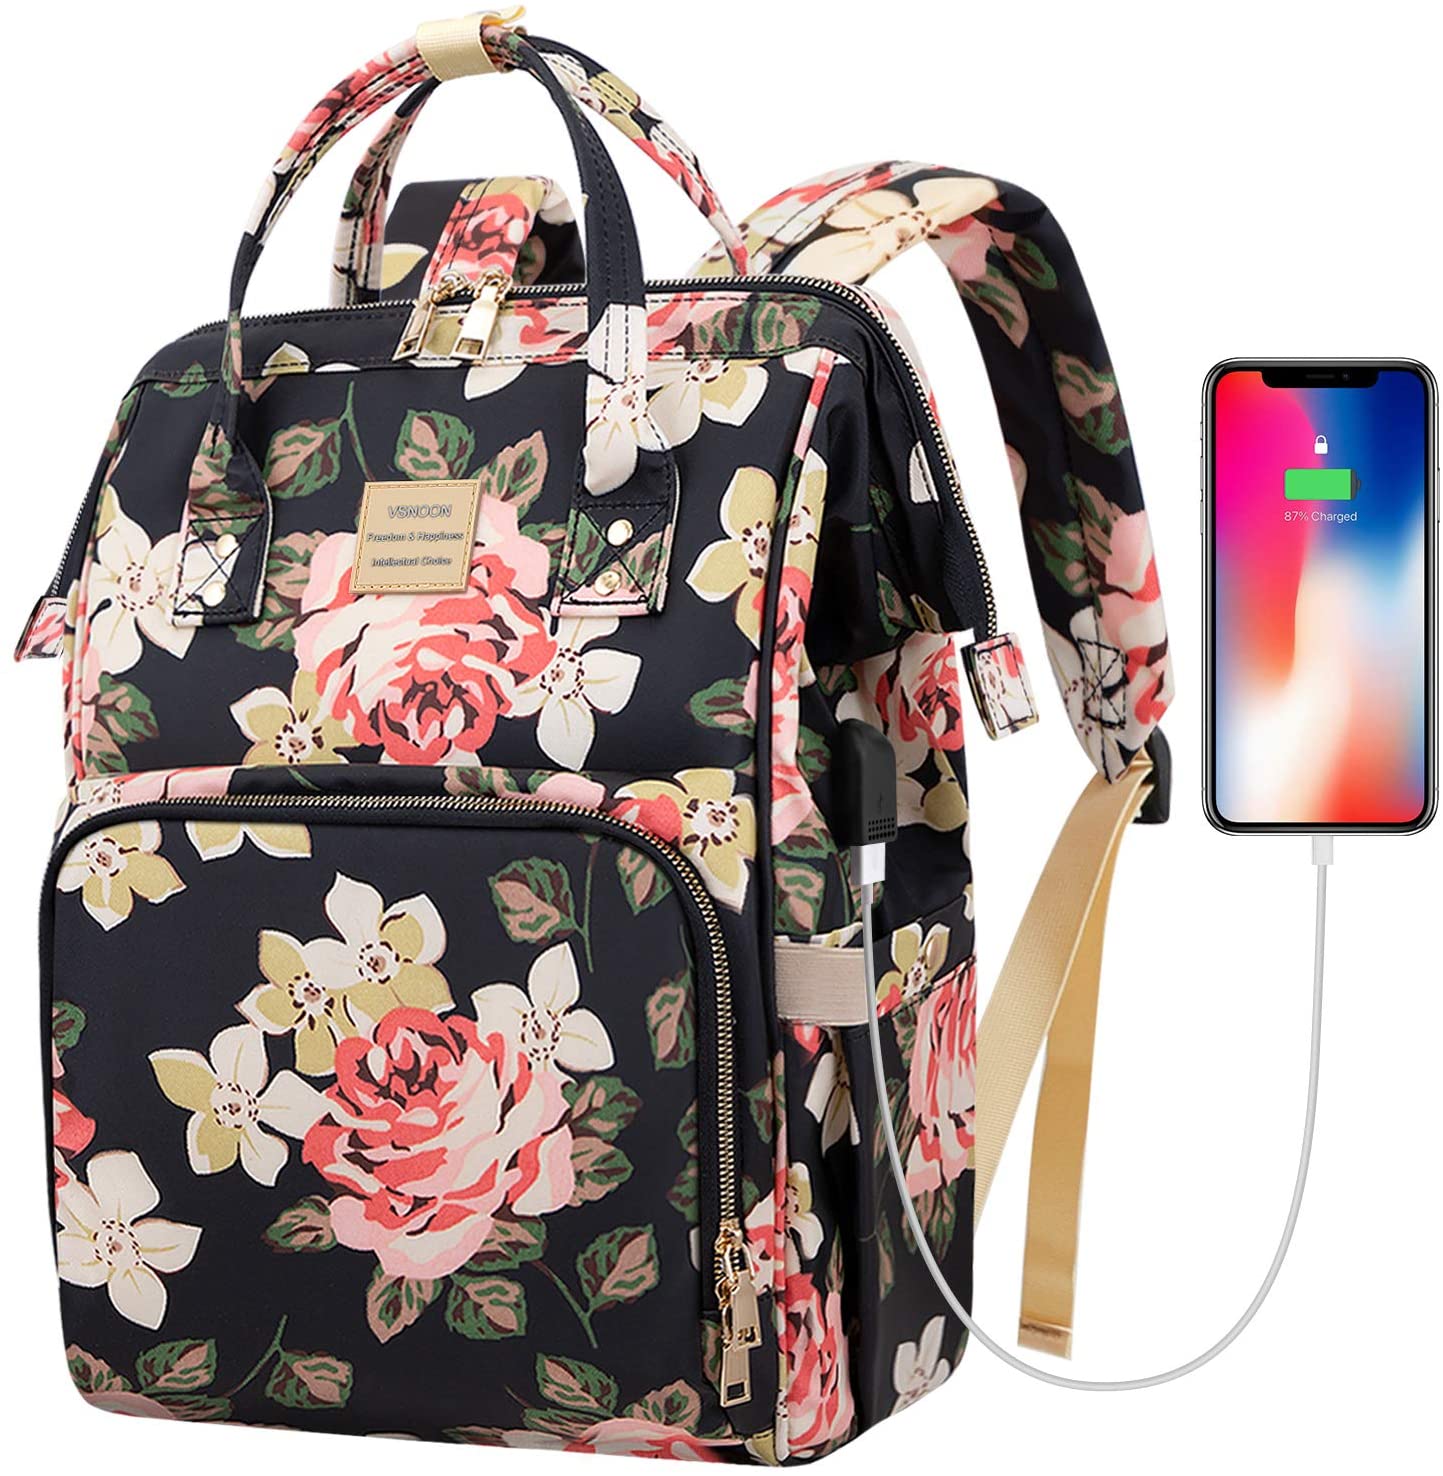 VSNOON Floral Print Backpack For Women